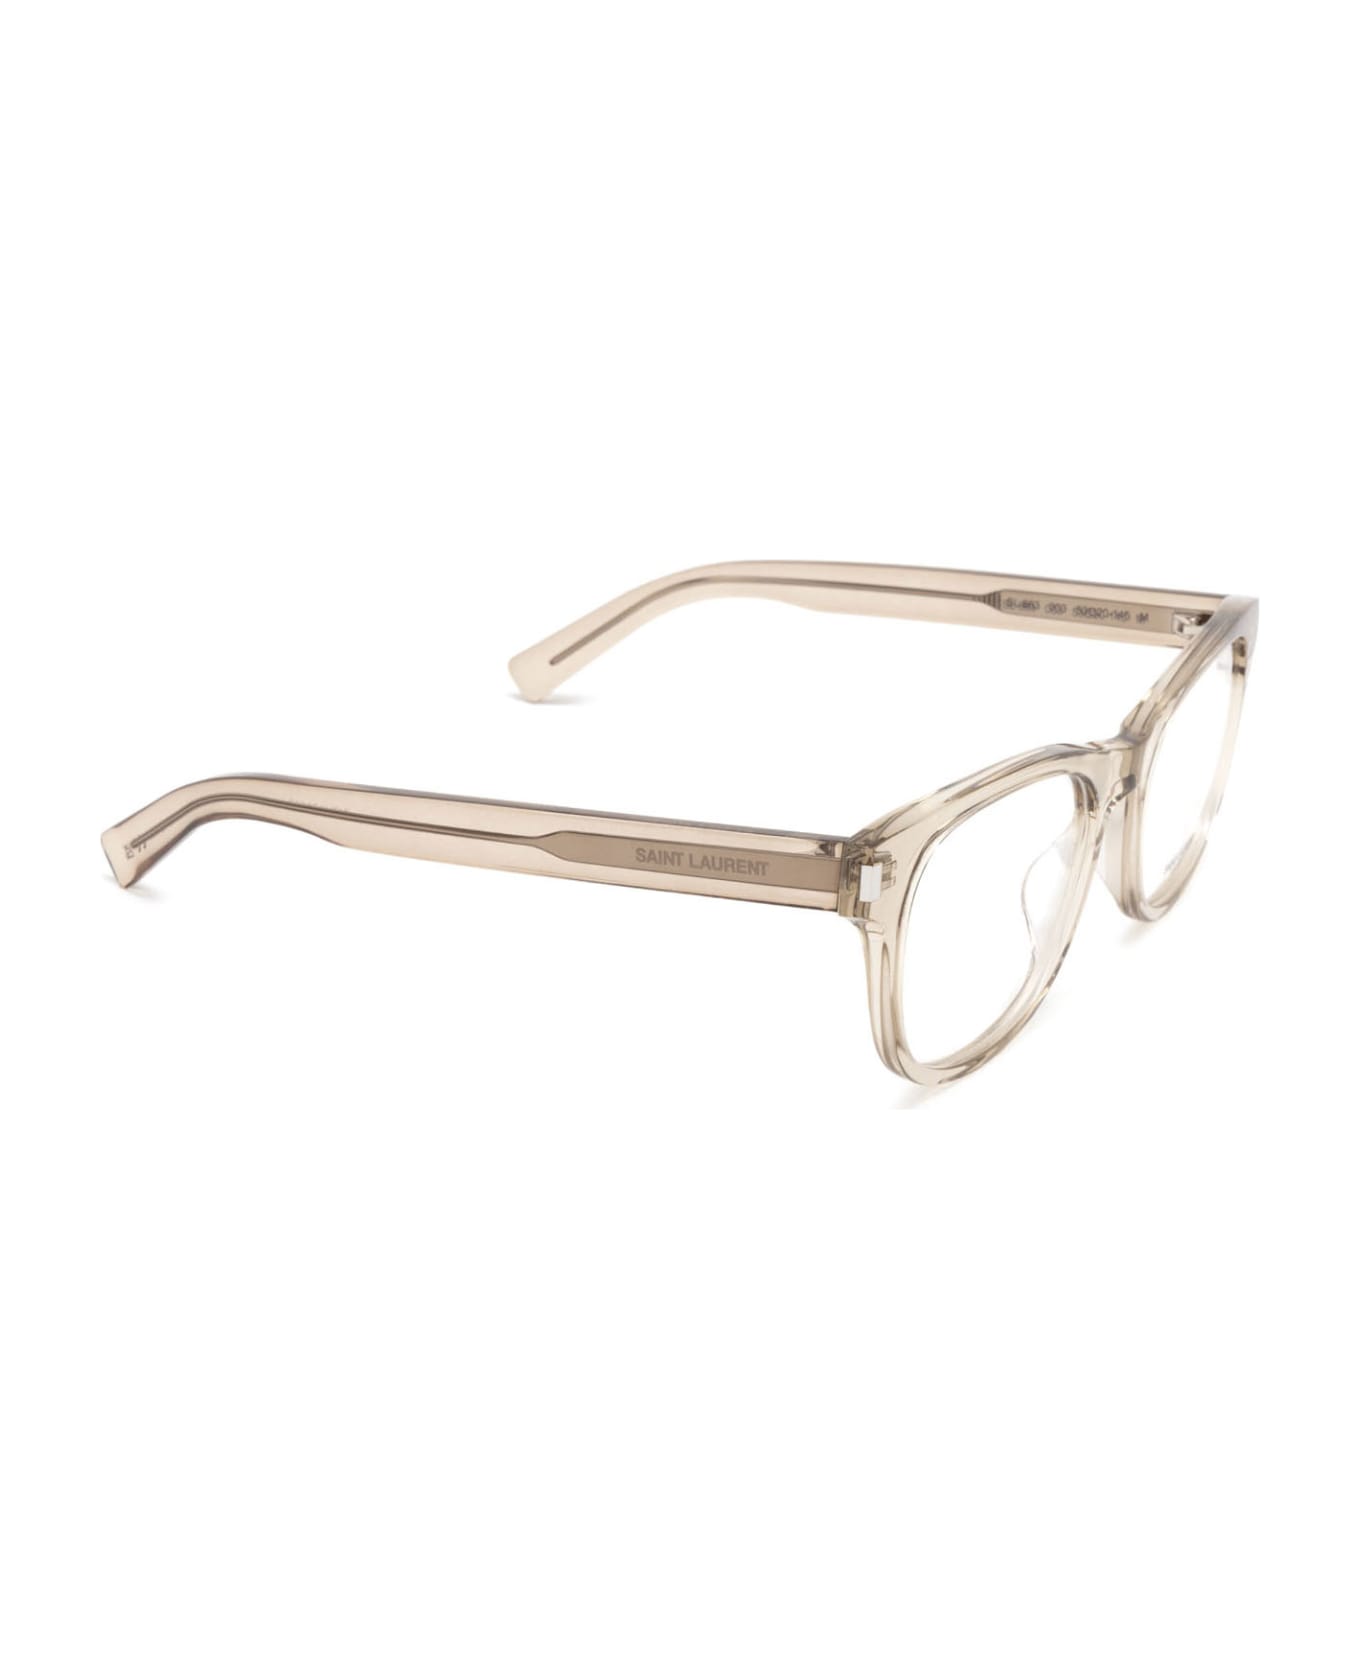 Saint Laurent Eyewear Sl 663 Beige Glasses - Beige